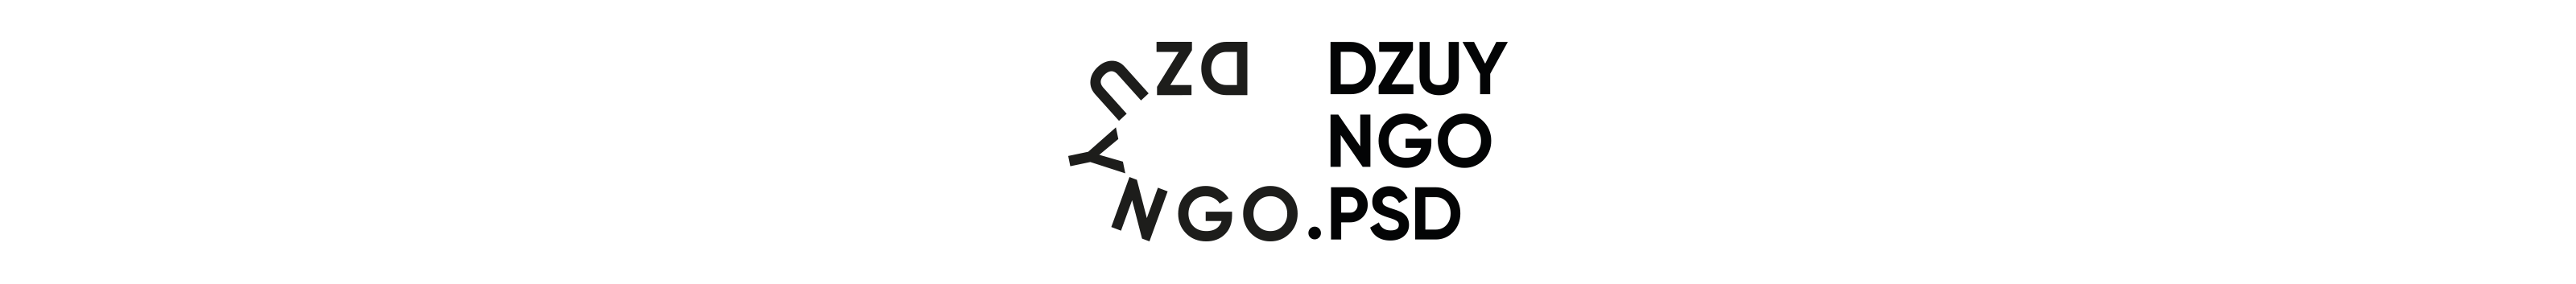 Баннер профиля Dzuy Ngo